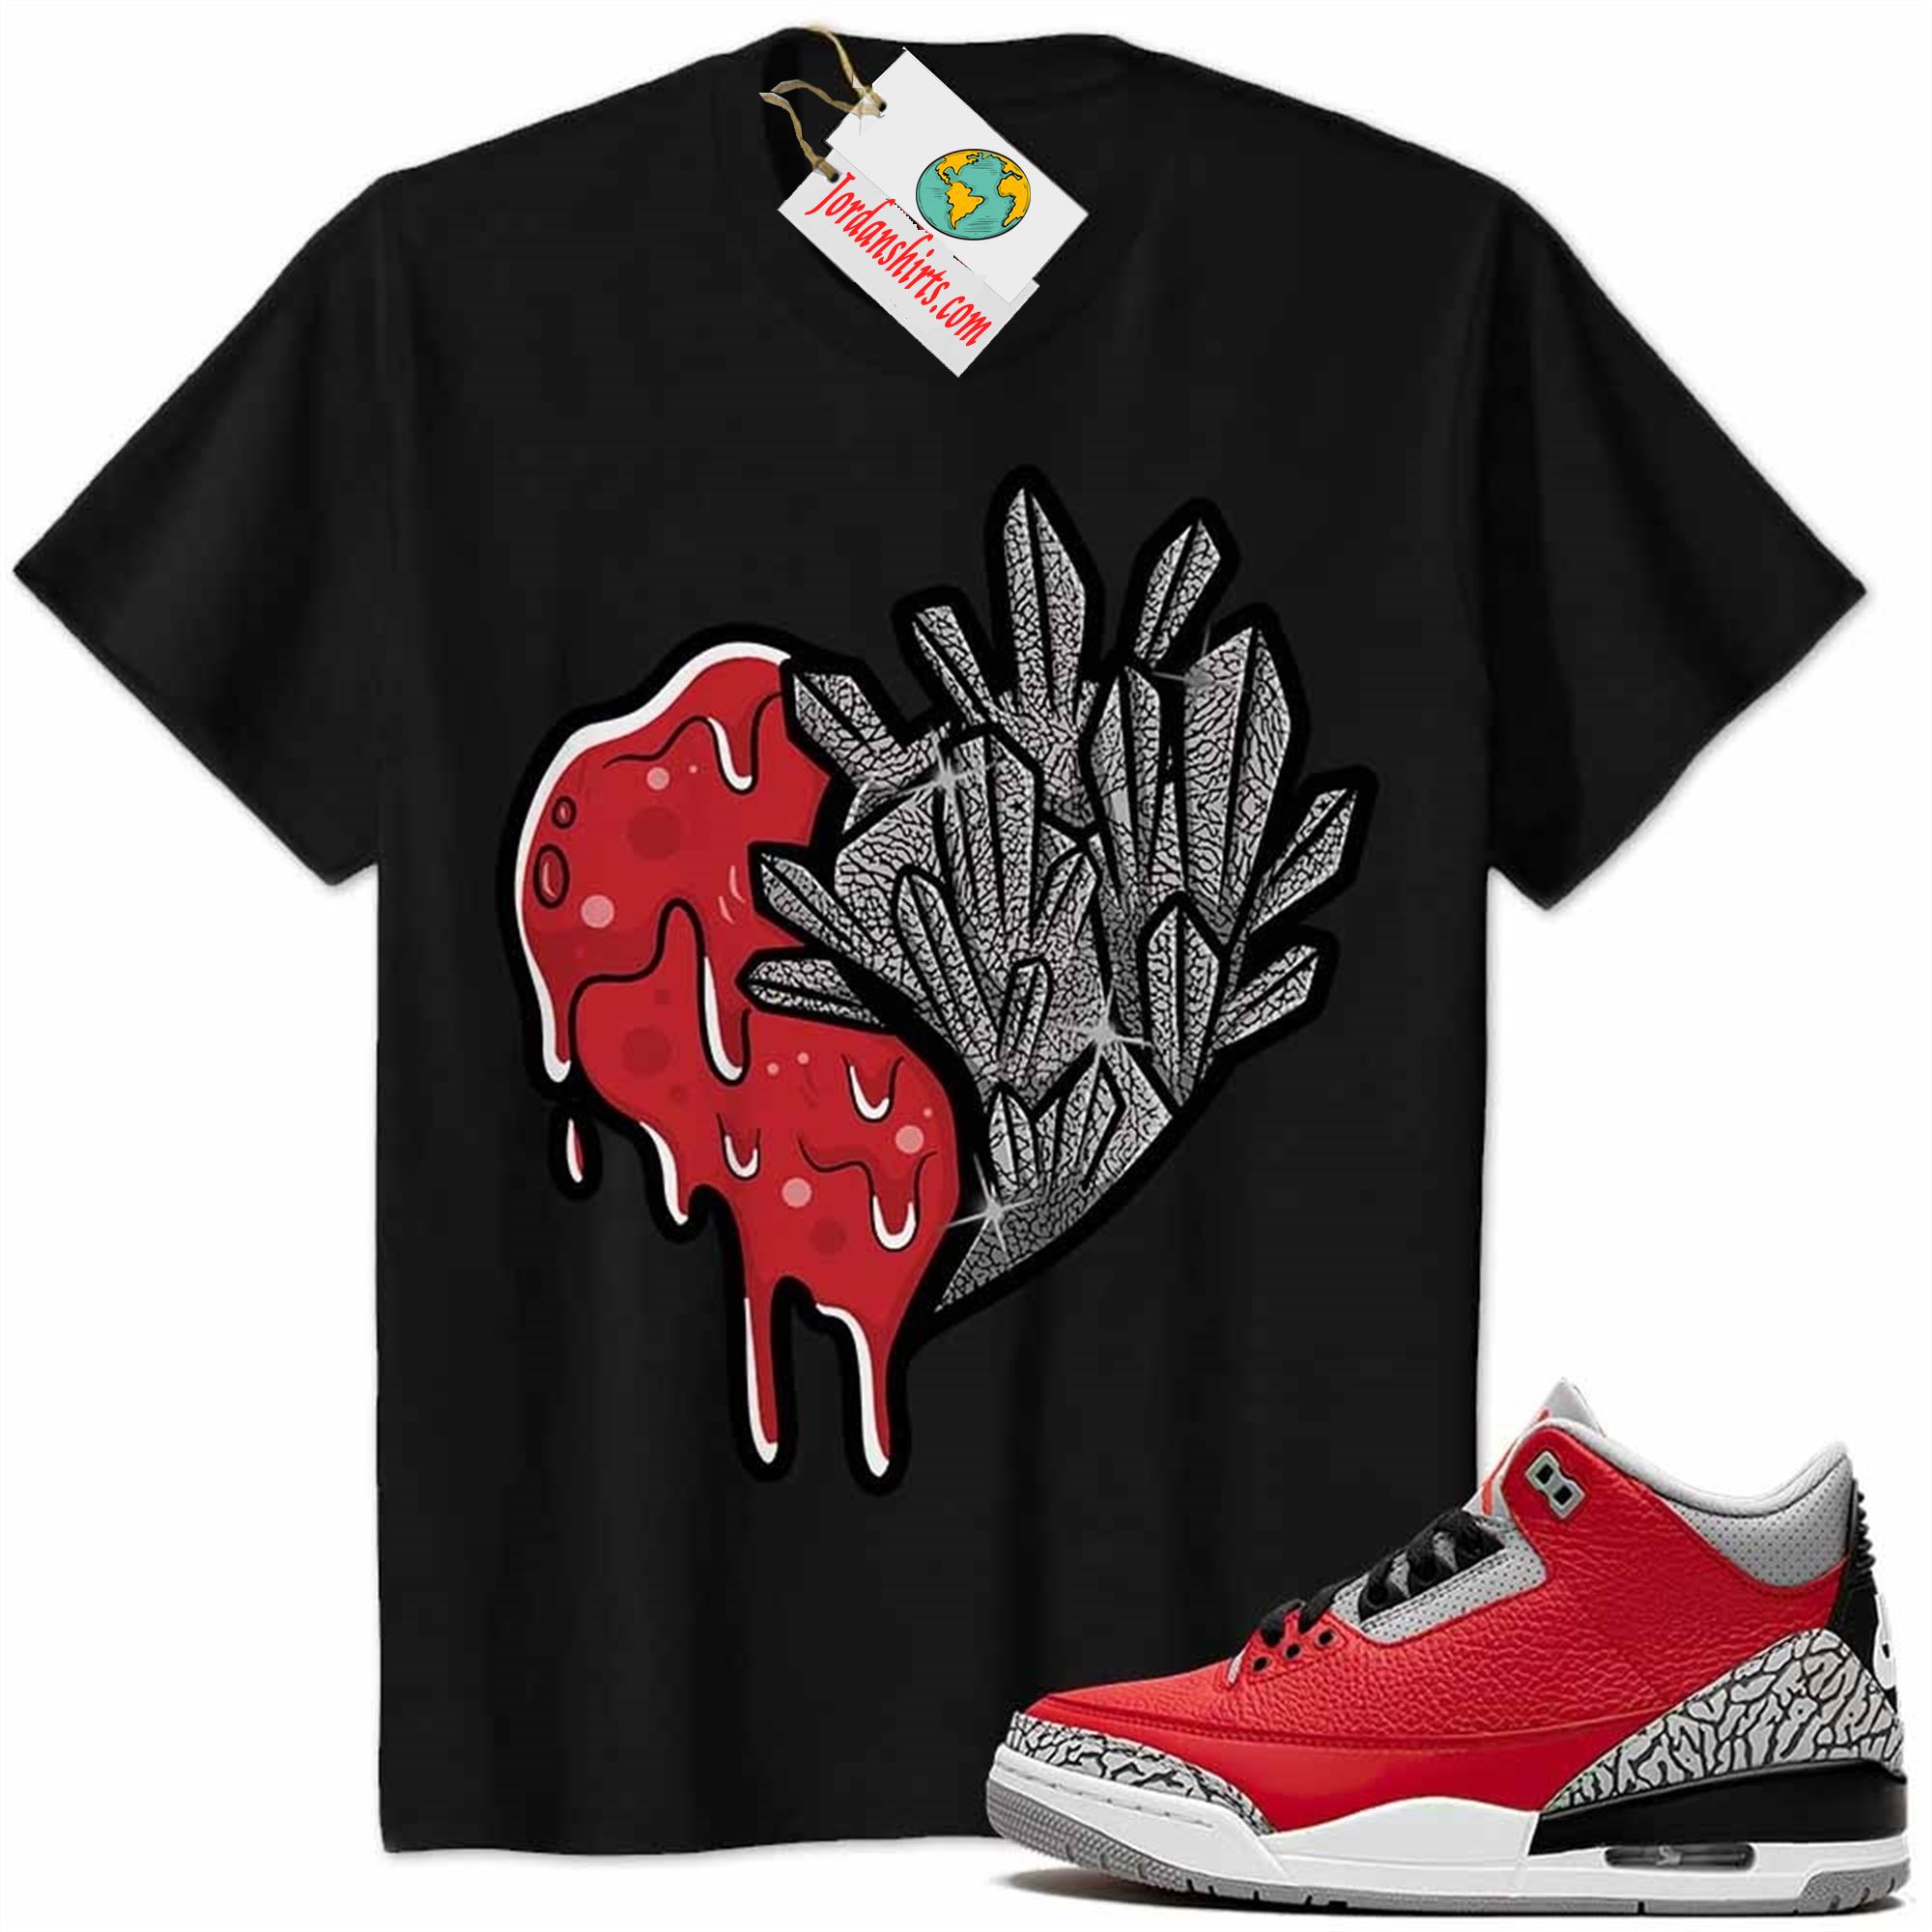 Jordan 3 Shirt, Crystal And Melt Heart Black Air Jordan 3 Cement 3s Full Size Up To 5xl